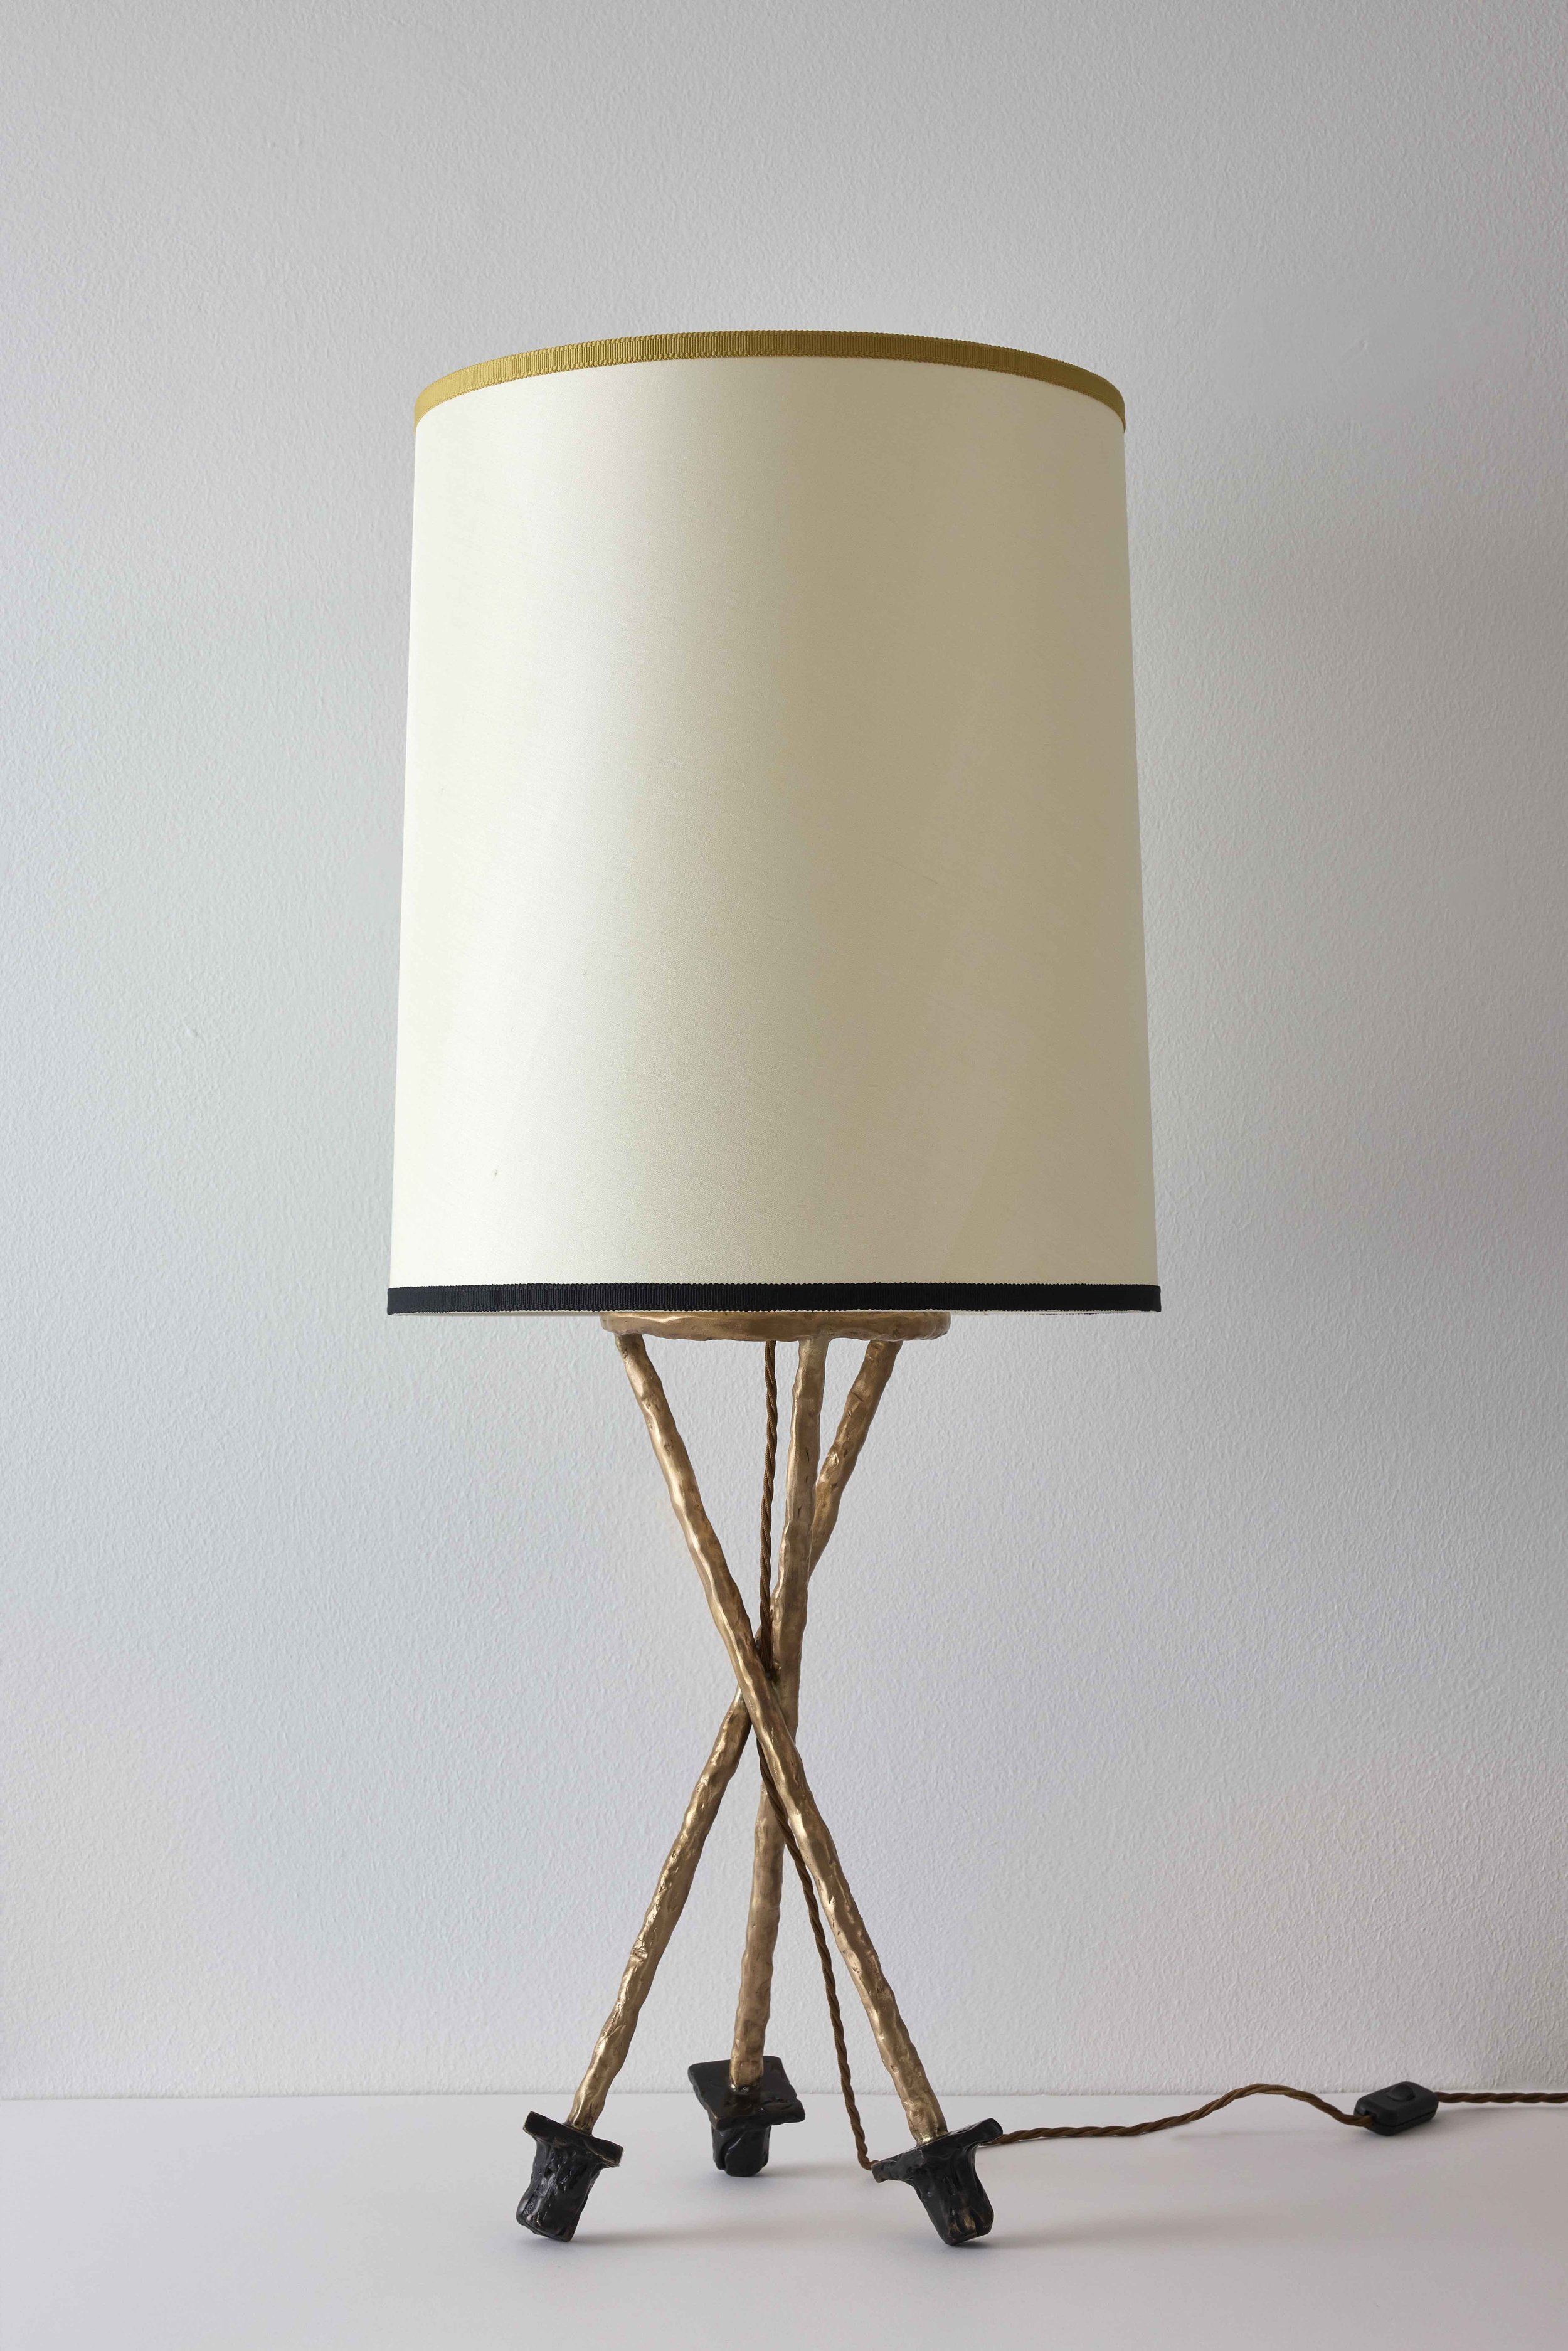 2.MB Table Lamp 'Eaton'.jpg